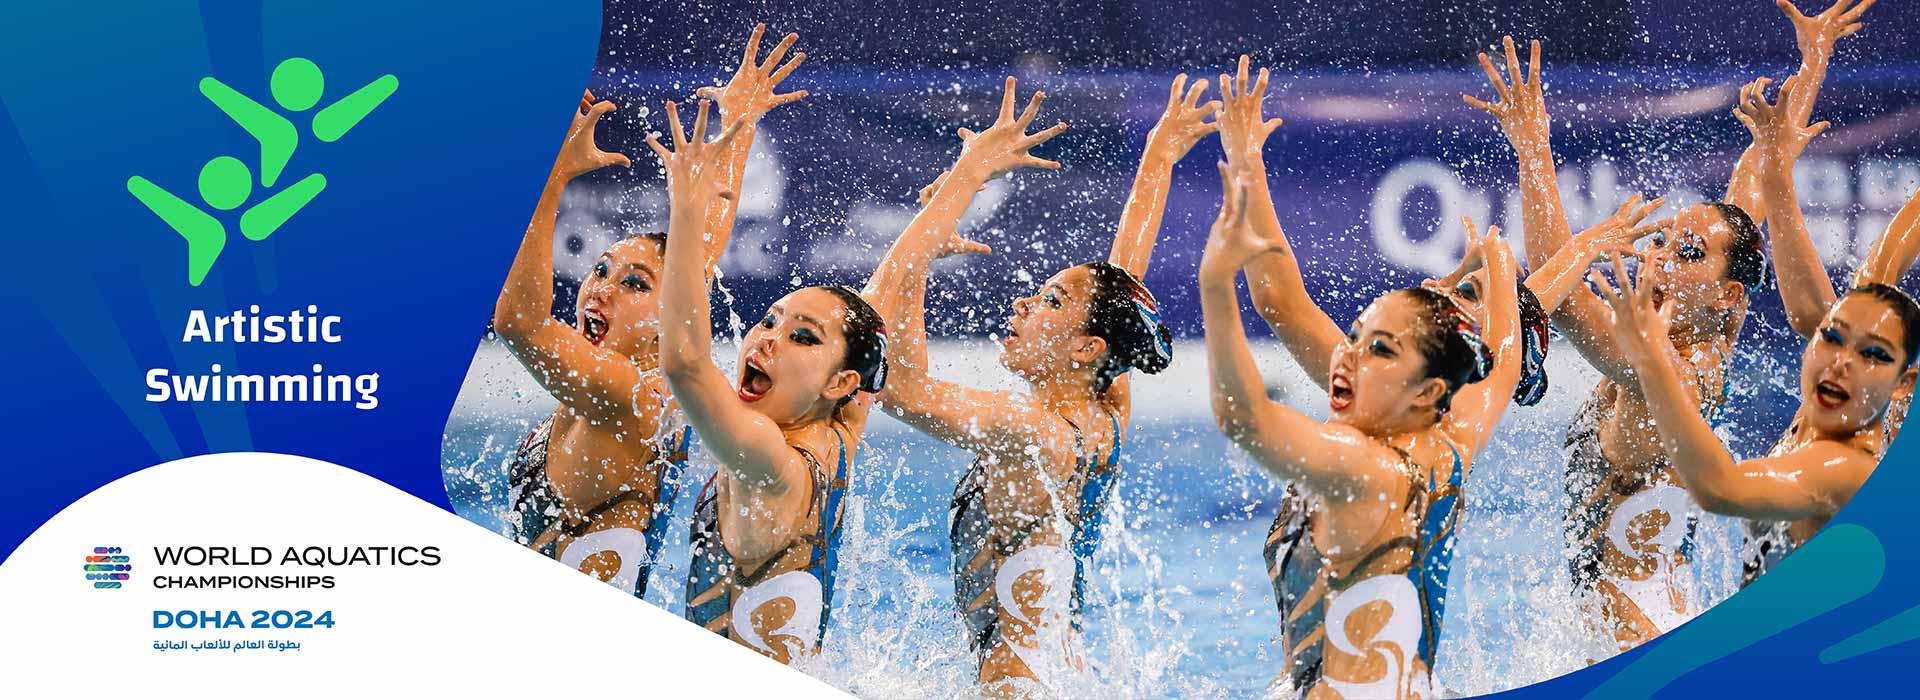 World Aquatics Championships Doha 2024 Artistic Swimming Registration